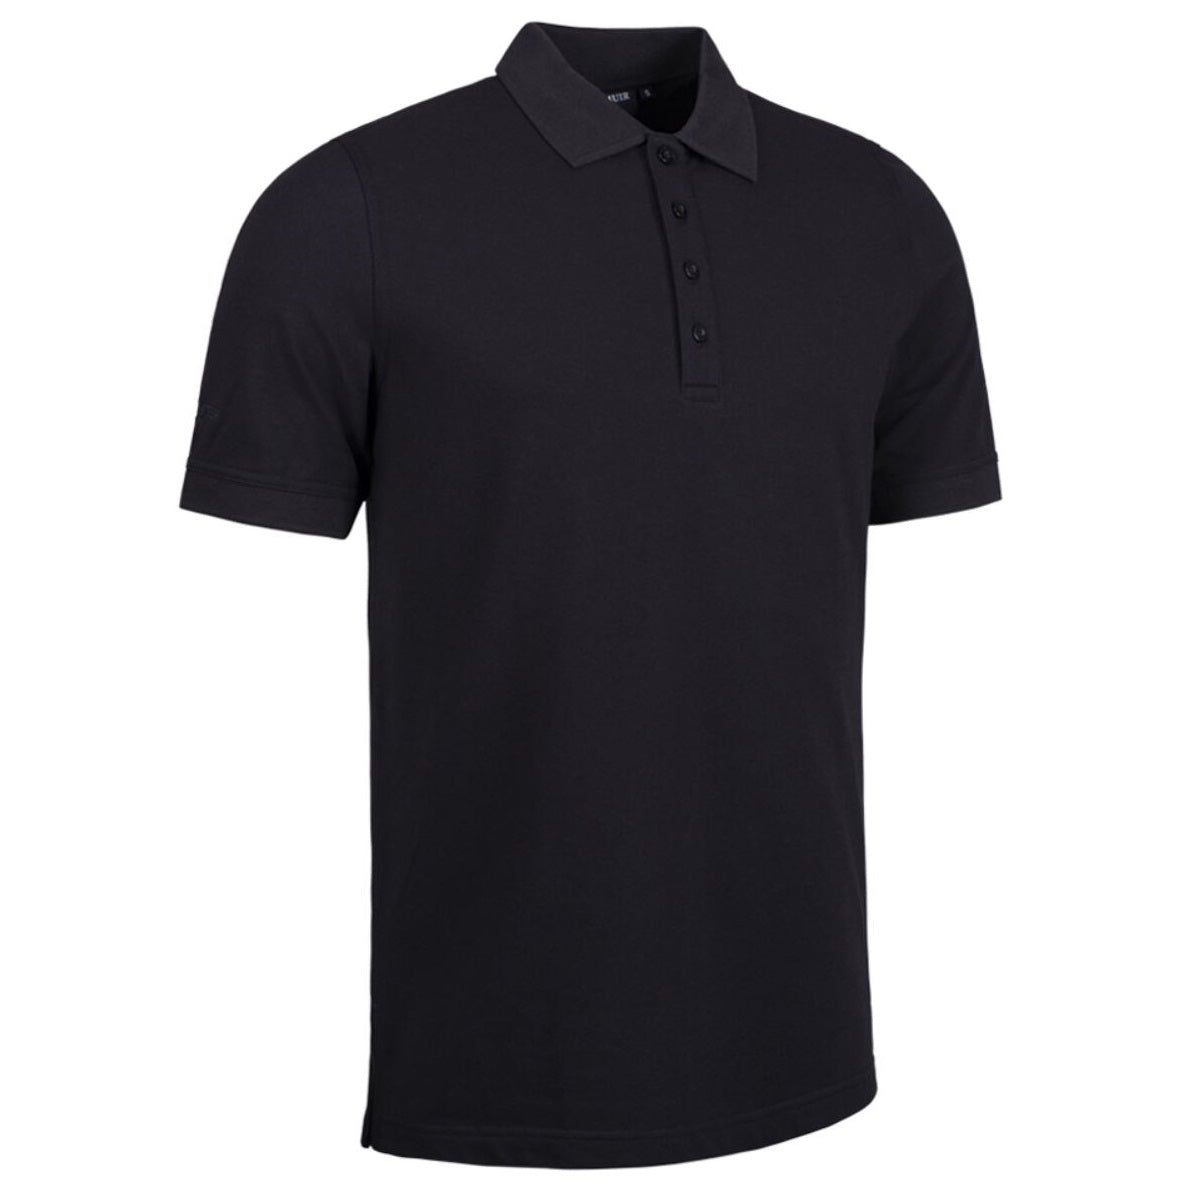 GLENMUIR Kinloch Cotton Pique Polo Shirt - Mens - Black